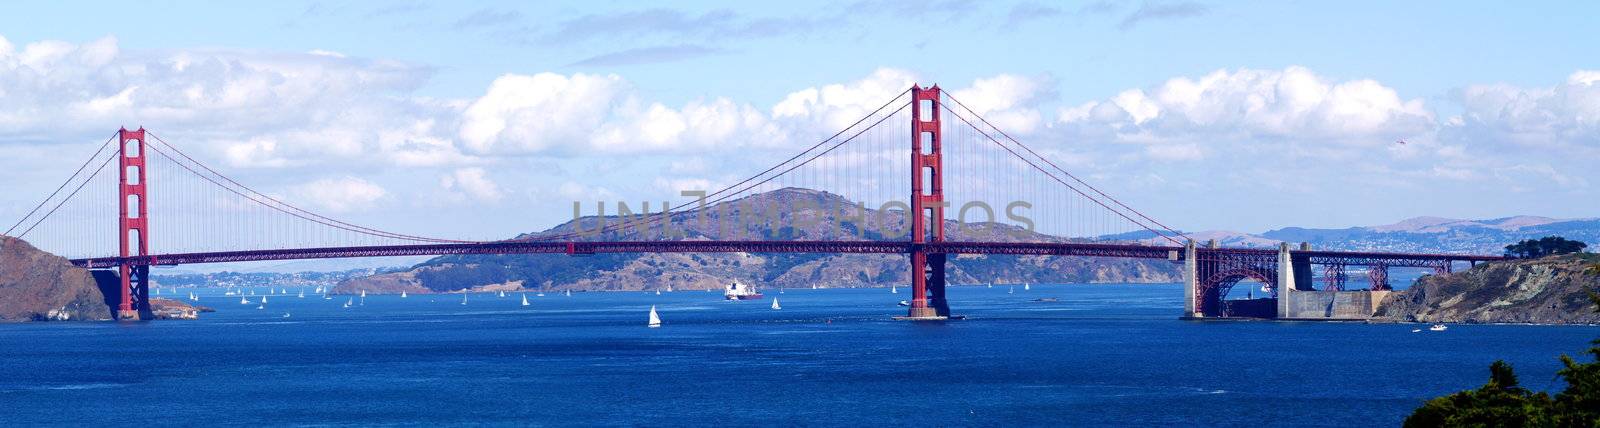 Golden Gate Bridge of San Francisco, California